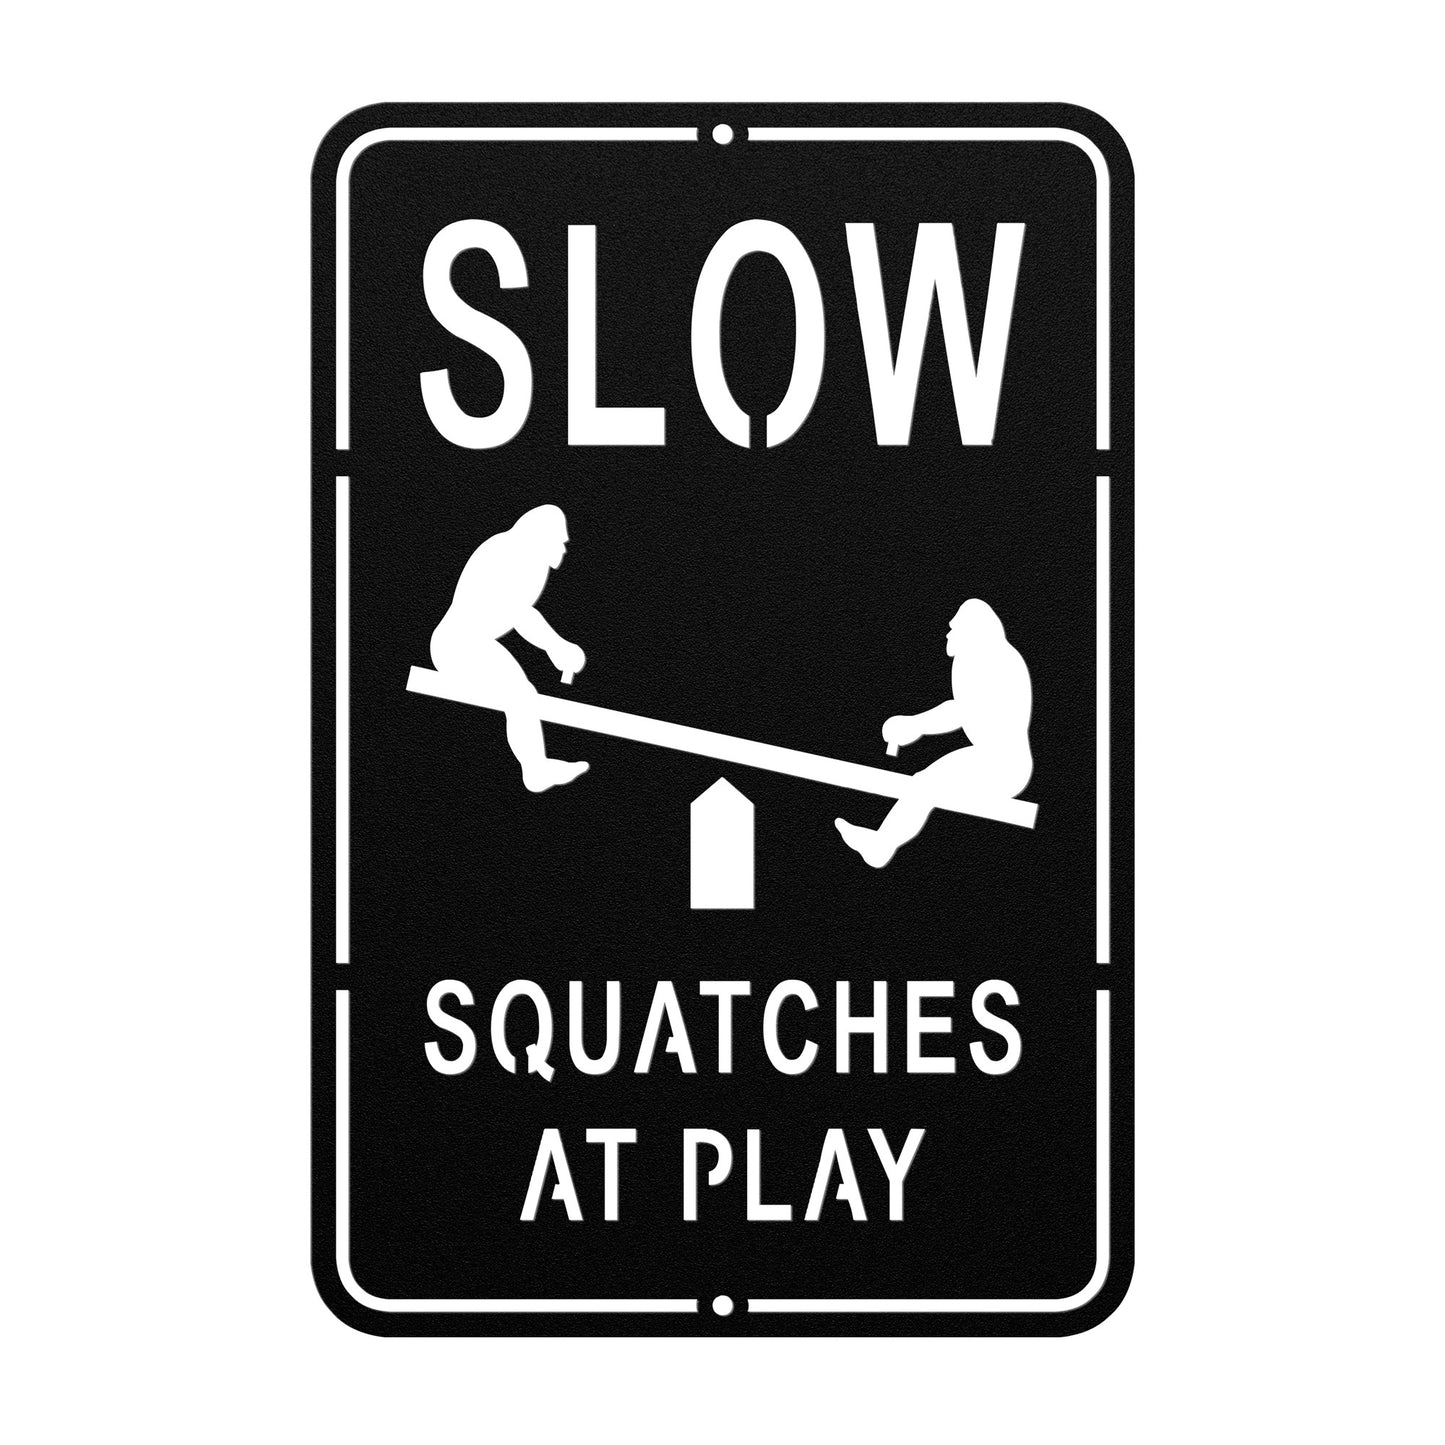 Slow, Sasquatch at Play Metal Art Sign